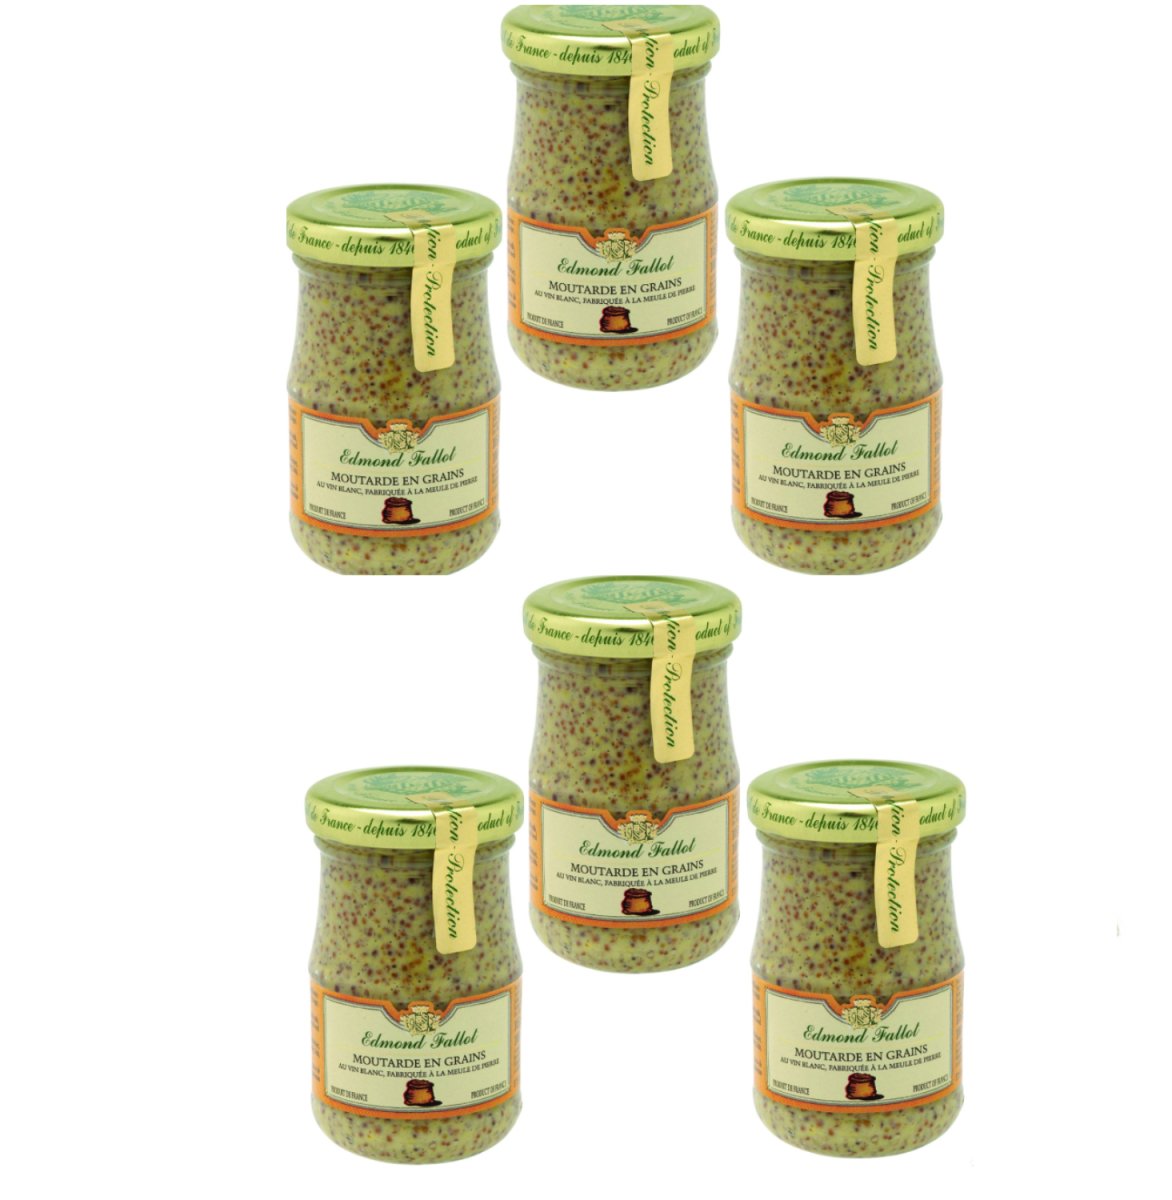 Edmond Fallot - Senf mit groben Senfkörnern (Moutarde en grains) im Glas (6 x 105 g) - Versanel -